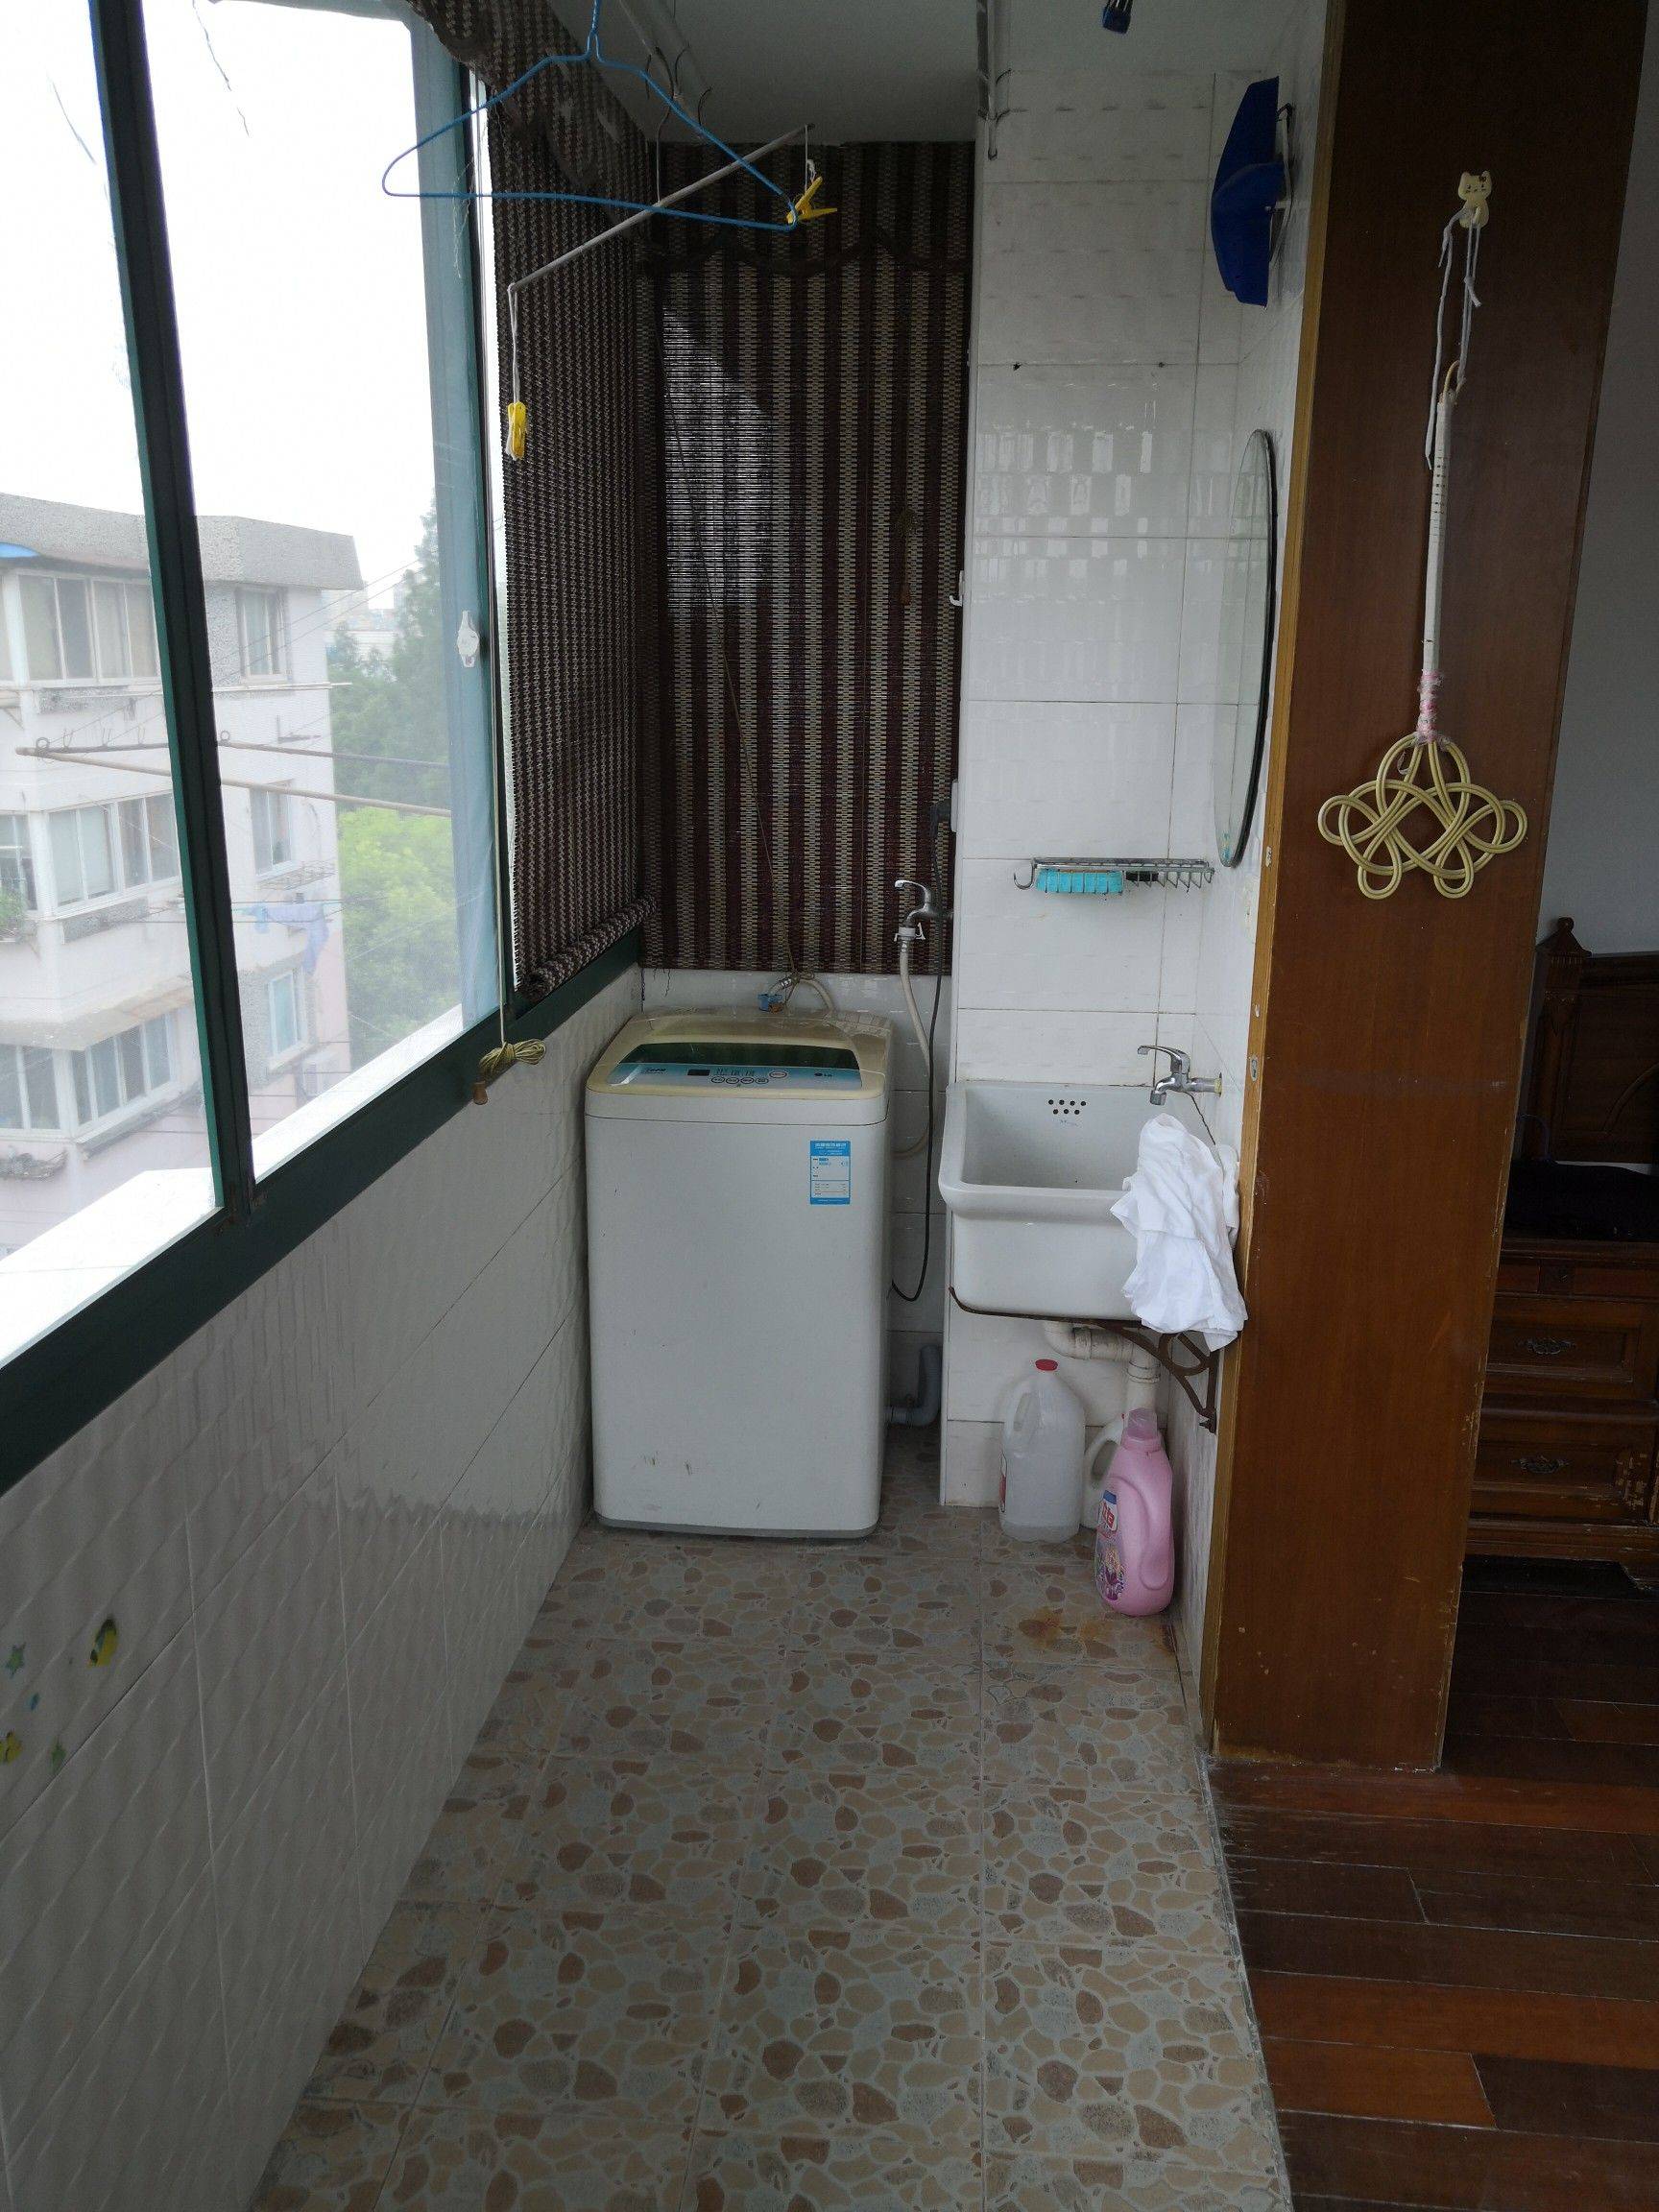 Shanghai-Yangpu-Cozy Home,Clean&Comfy,No Gender Limit,Hustle & Bustle,LGBTQ Friendly